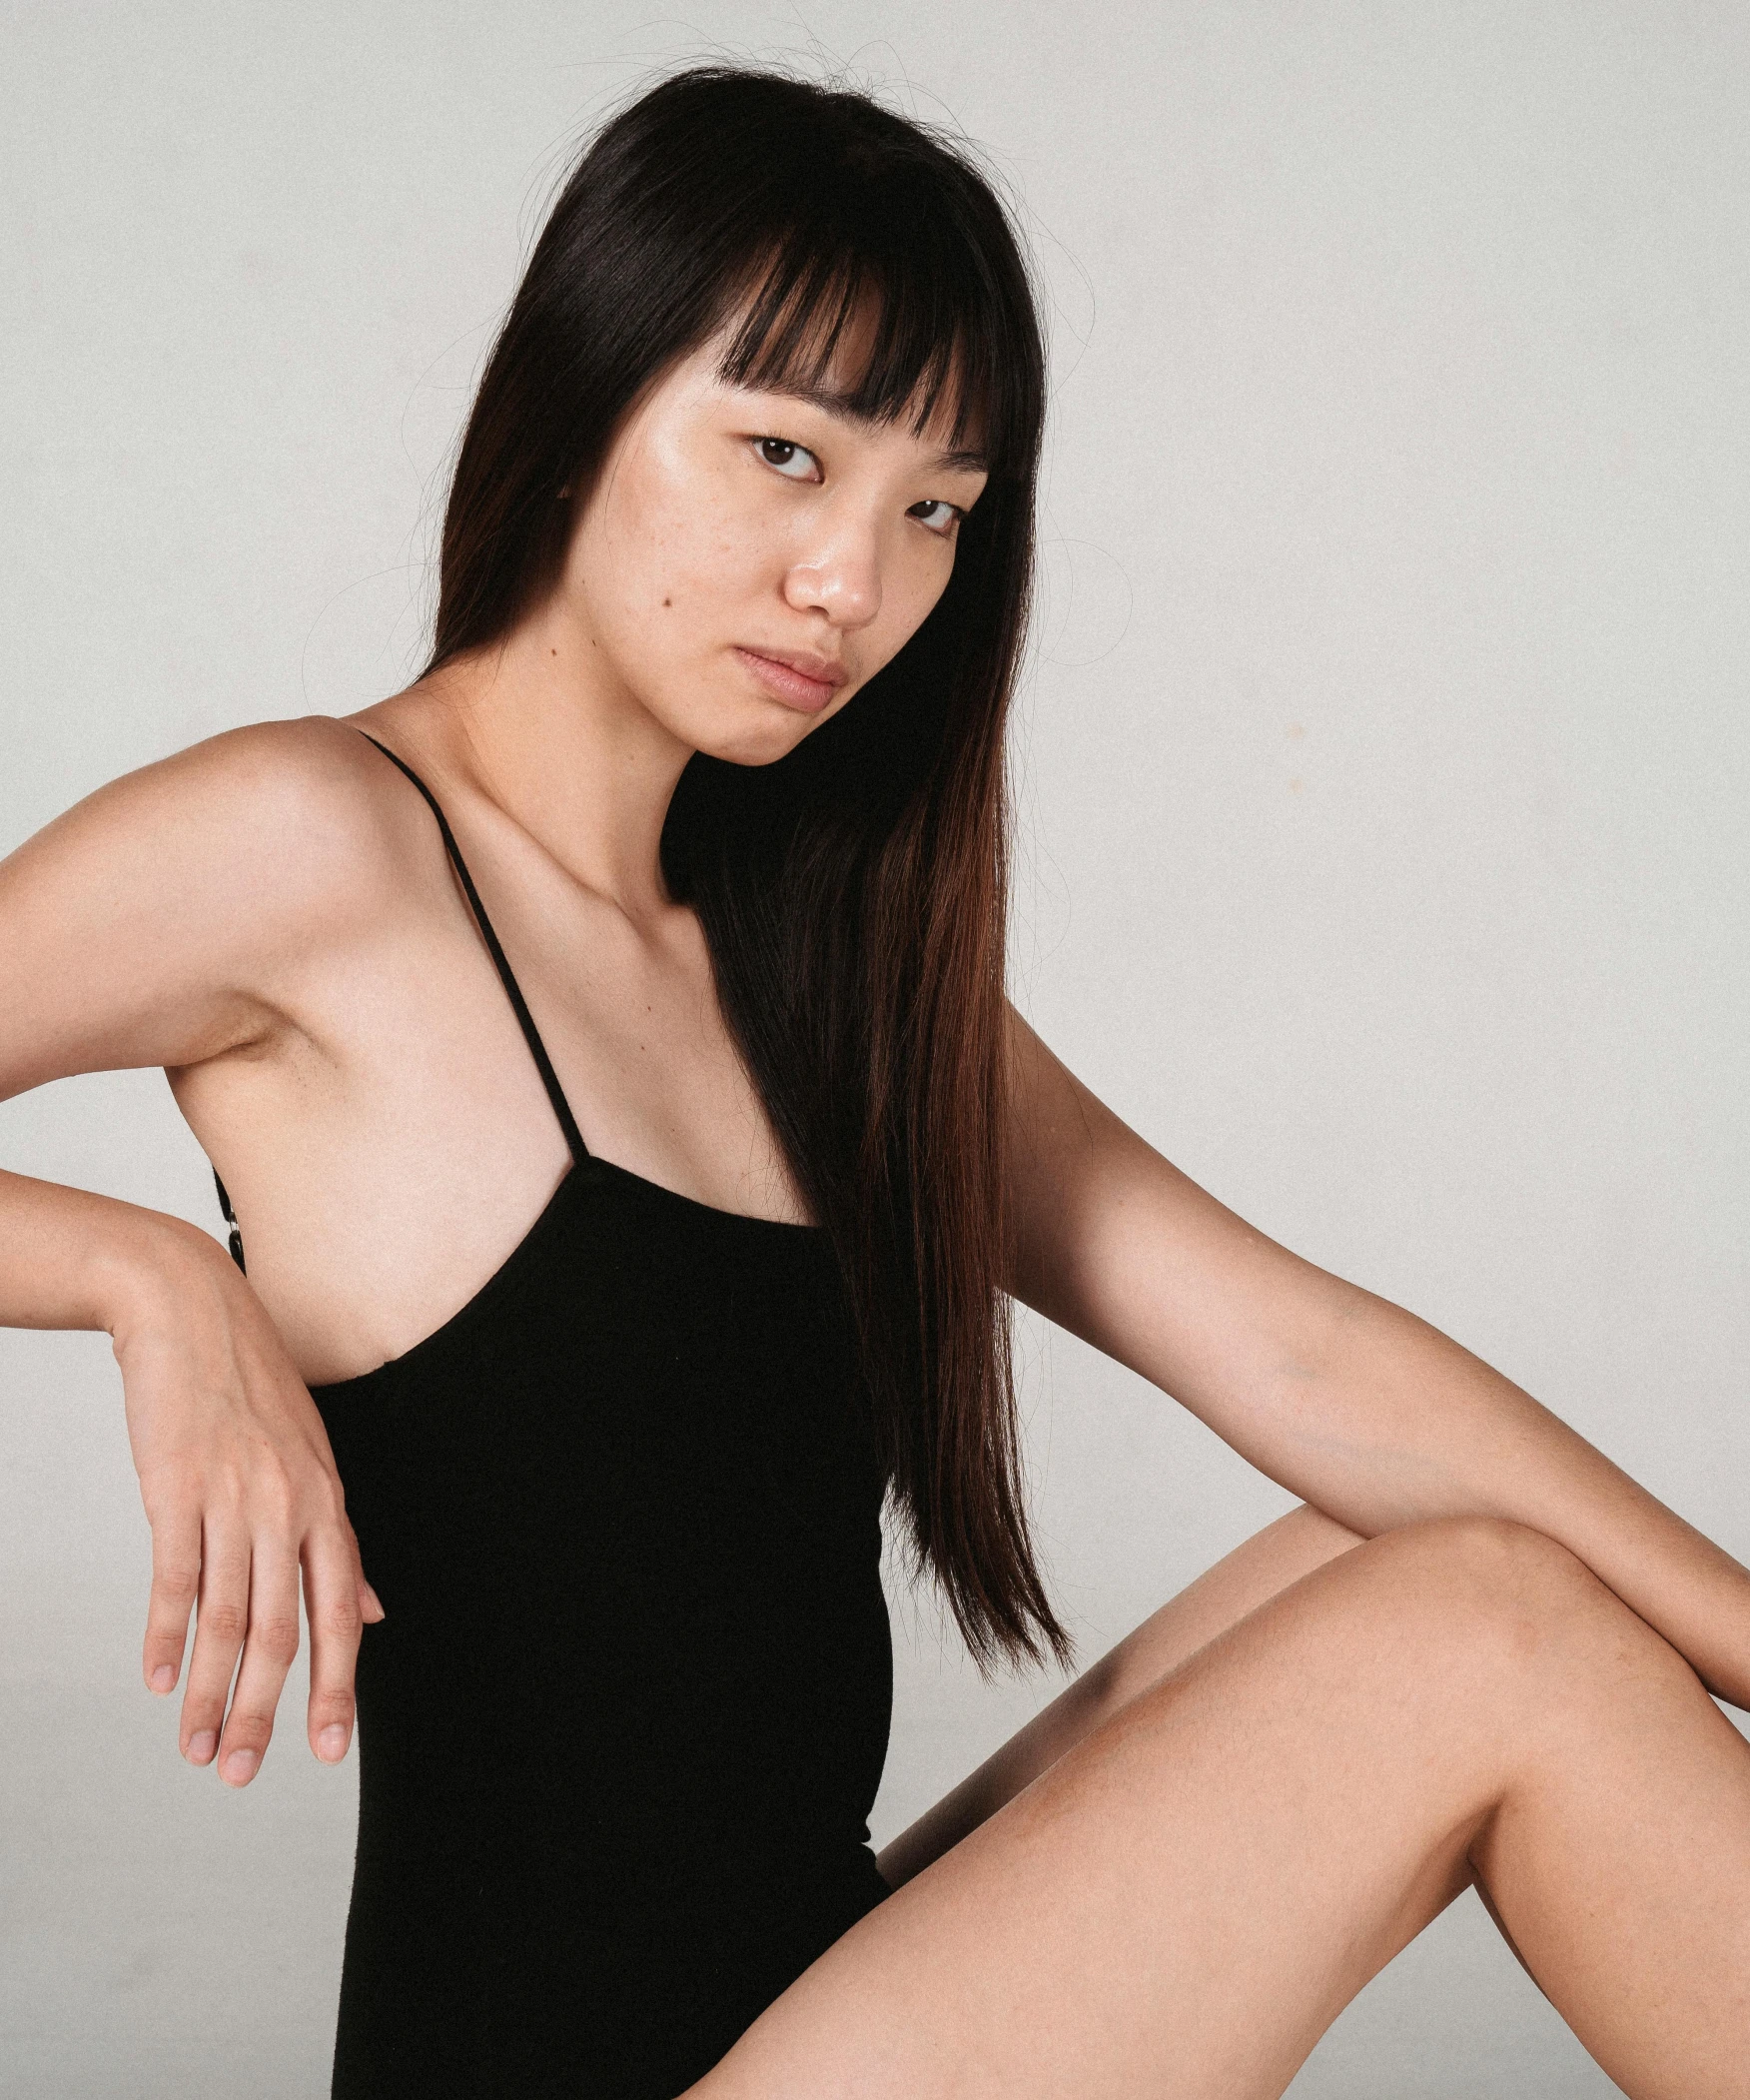 an asian woman is posing in a black dress